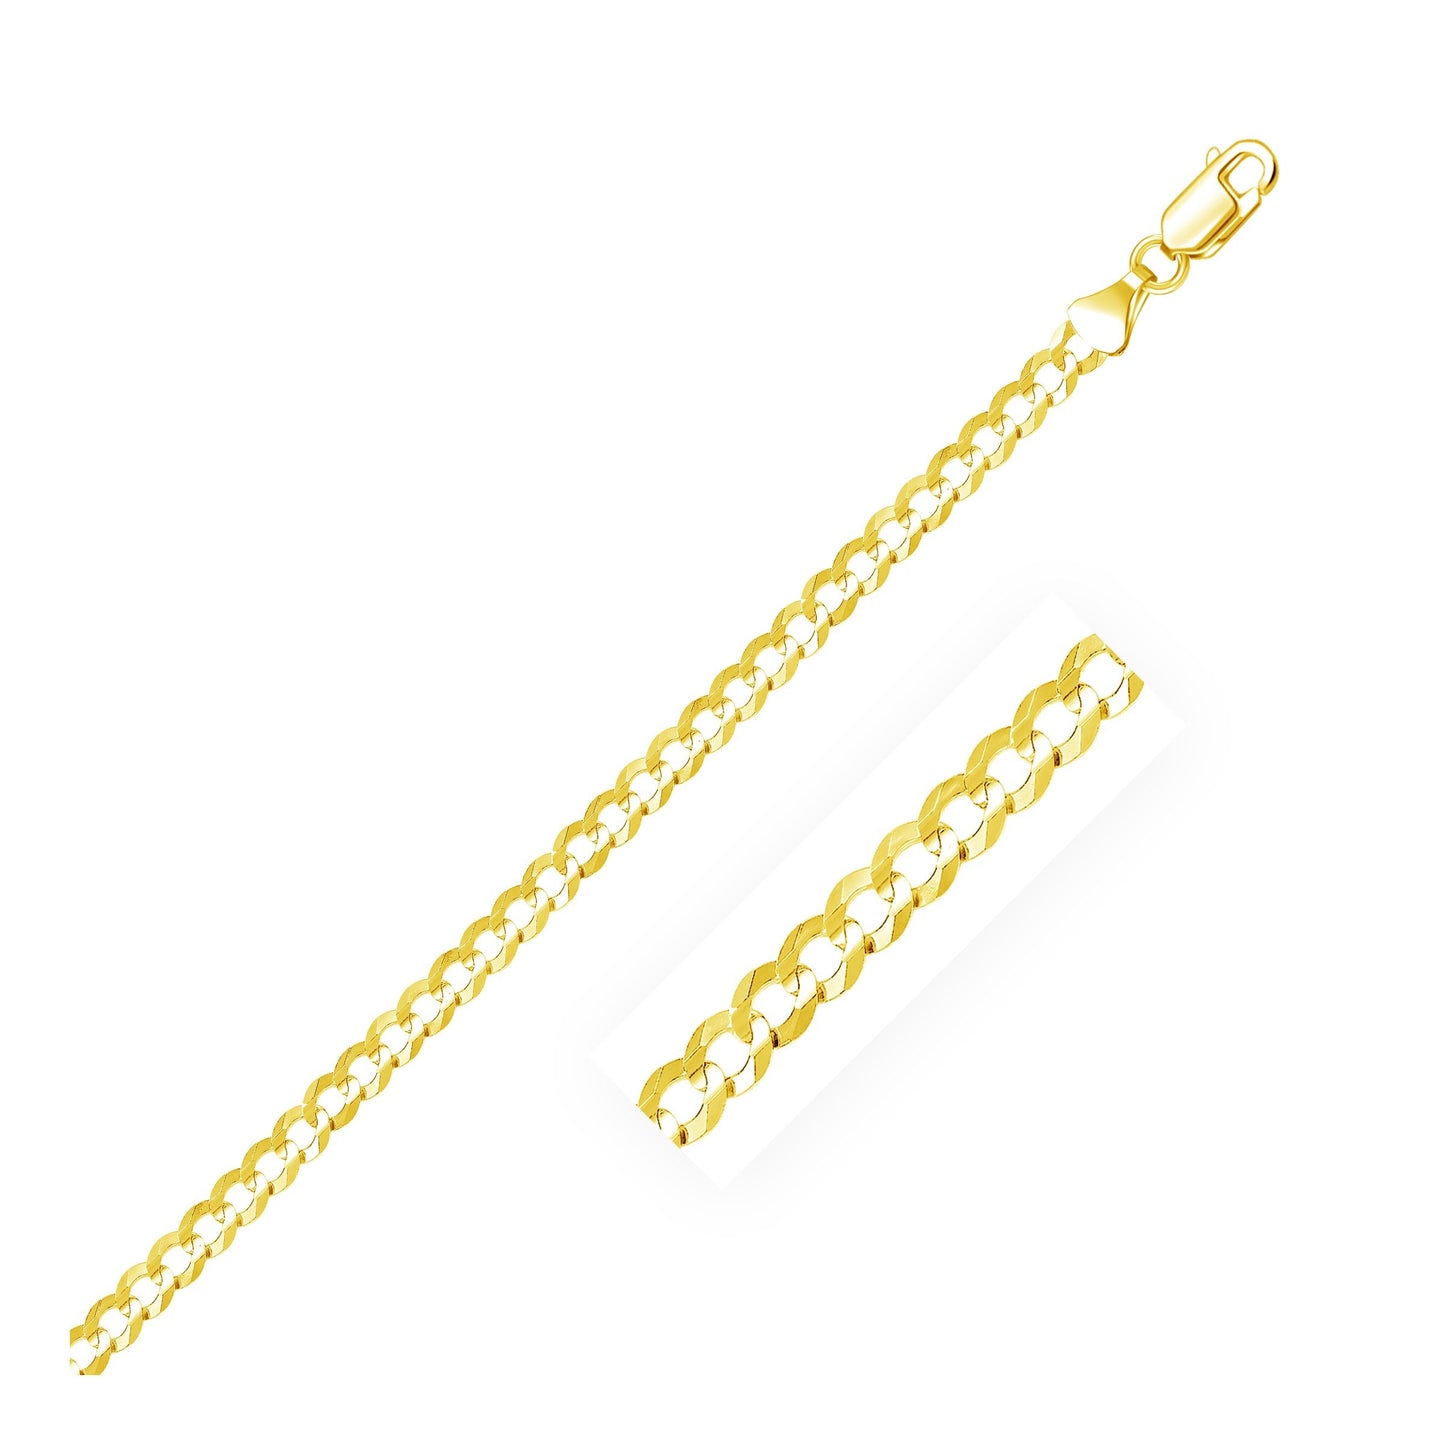 4.7mm 10k Yellow Gold Curb Bracelet